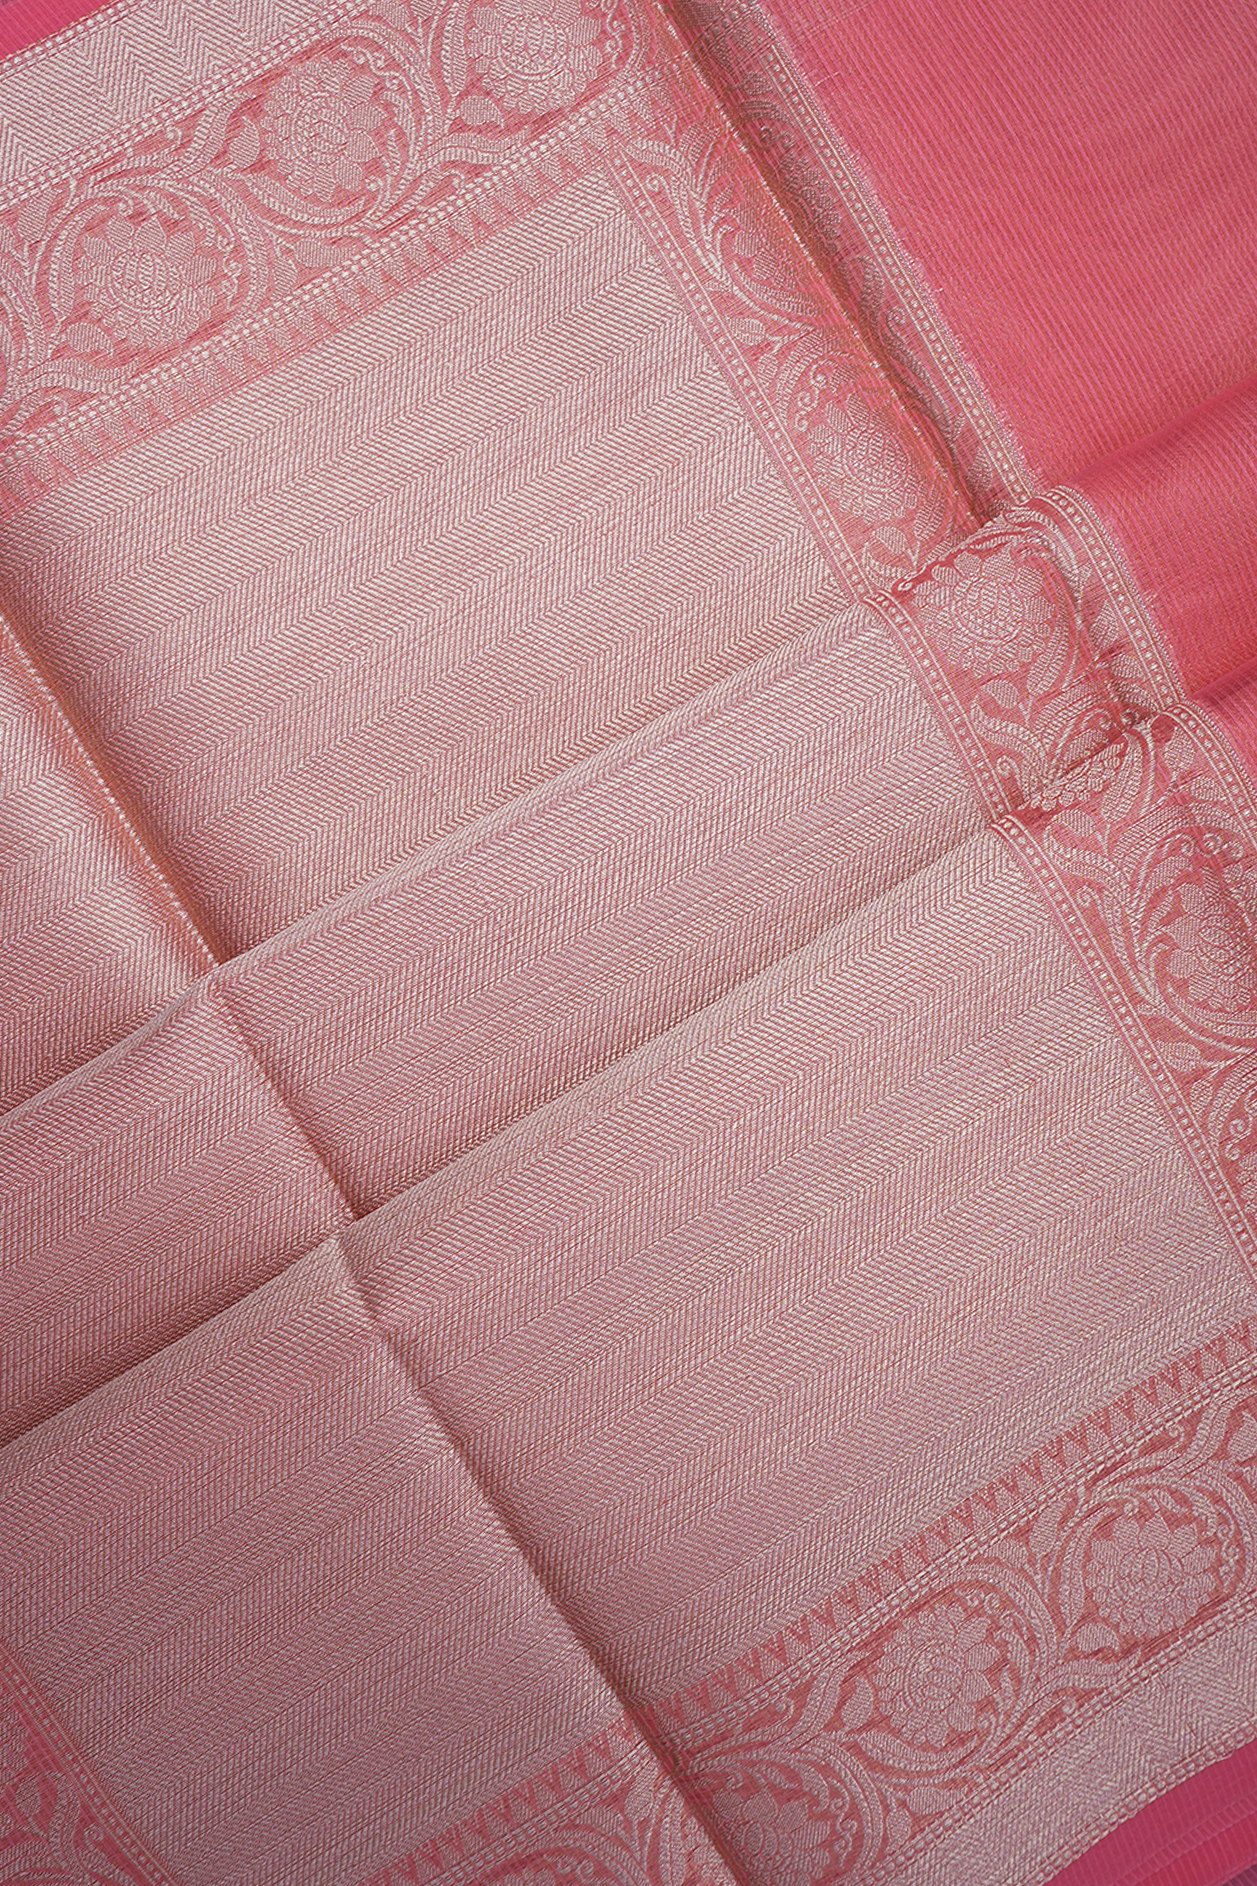 Diamond Design Peach Pink Kota Cotton Saree